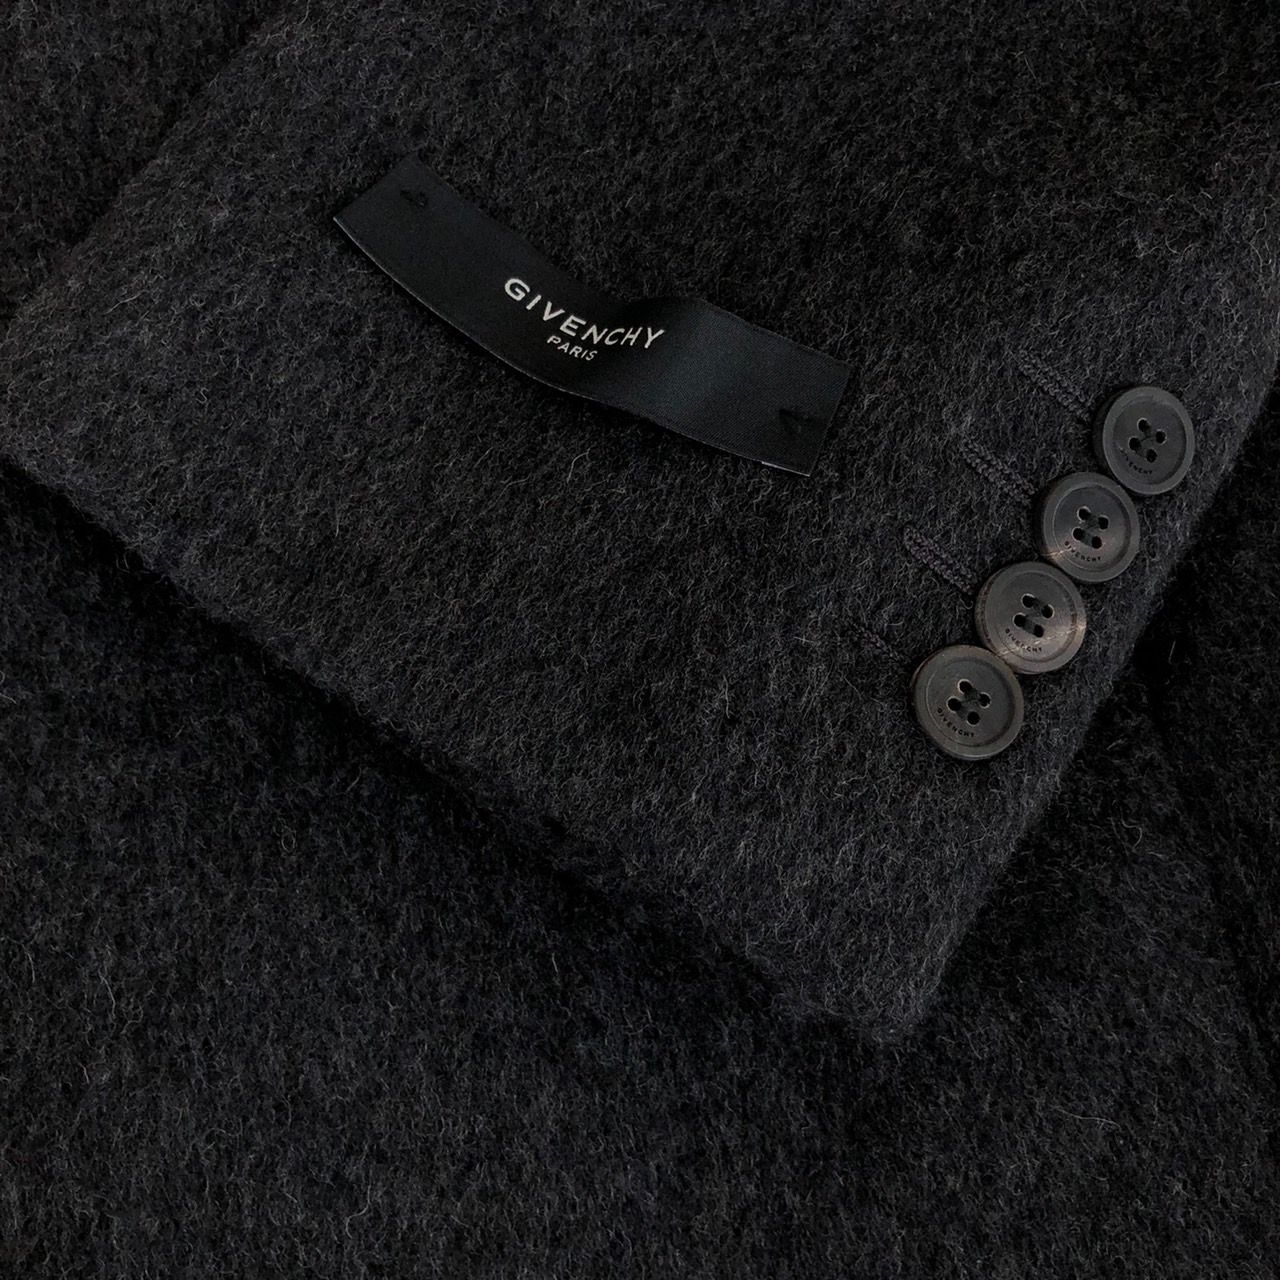 Givenchy ジバンシー メンズ コート アウター 48 サイズ - すぺ - メルカリ